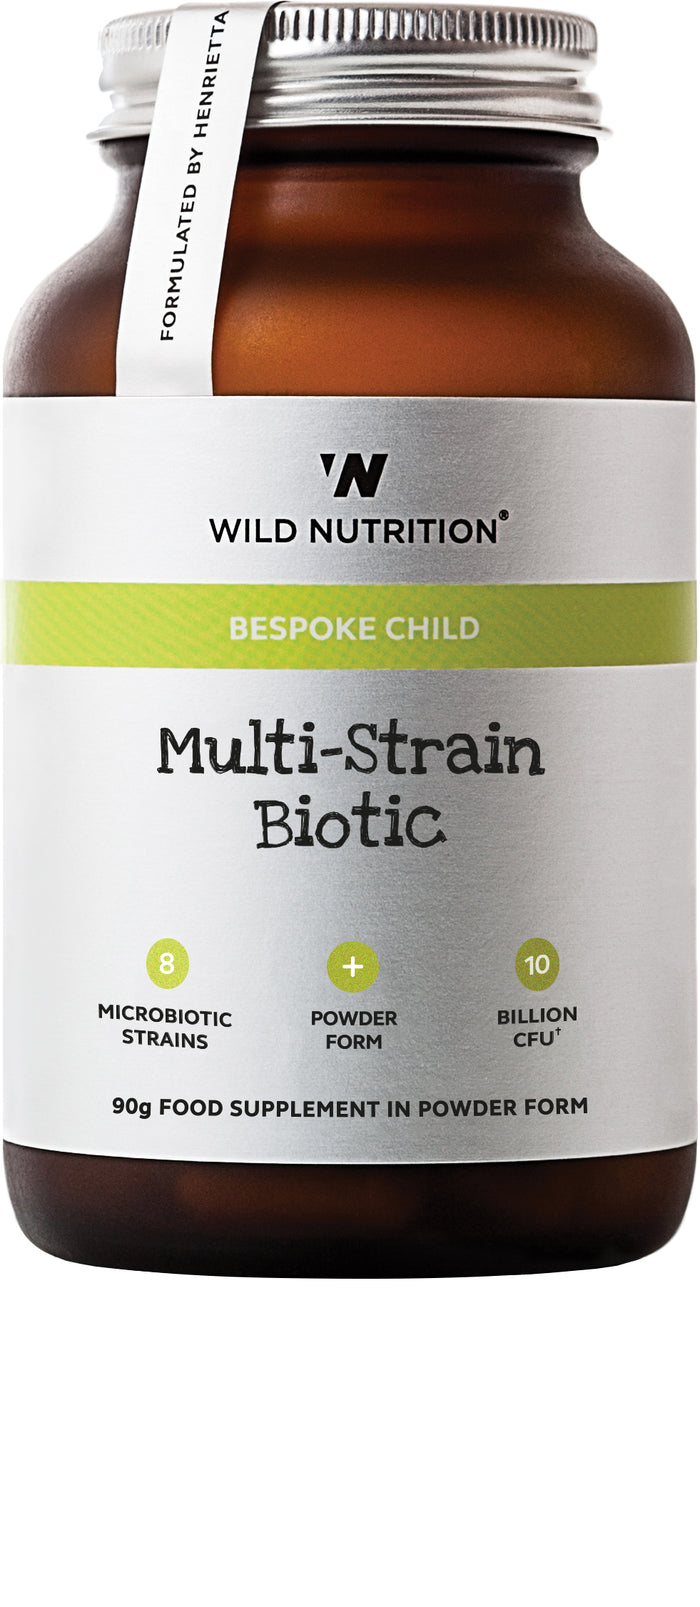 Wild Nutrition Bespoke Child Multi-Strain Biotic 90g